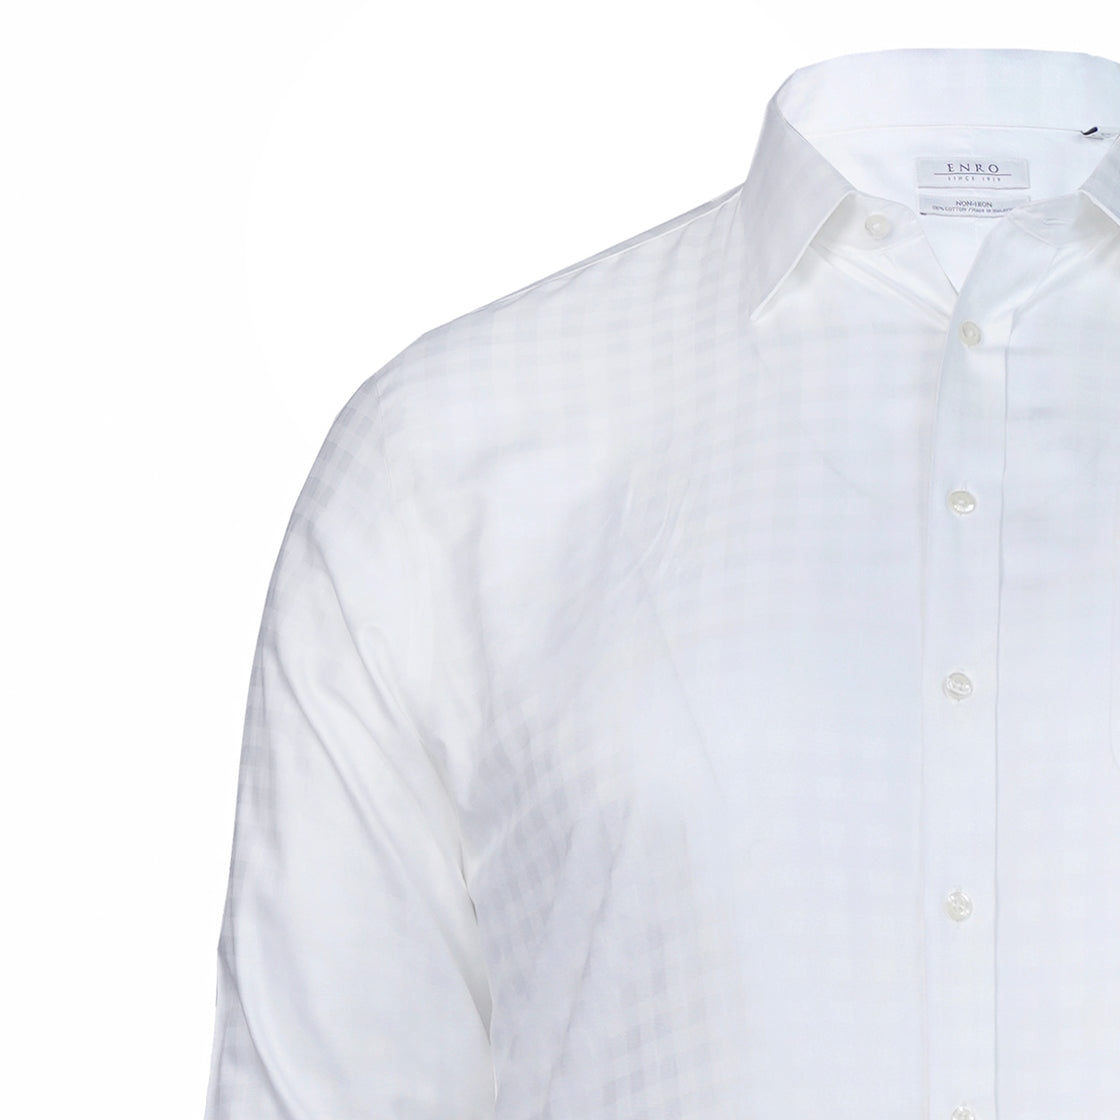 Checkered Pattern Enro Cotton Shirt White Closeup